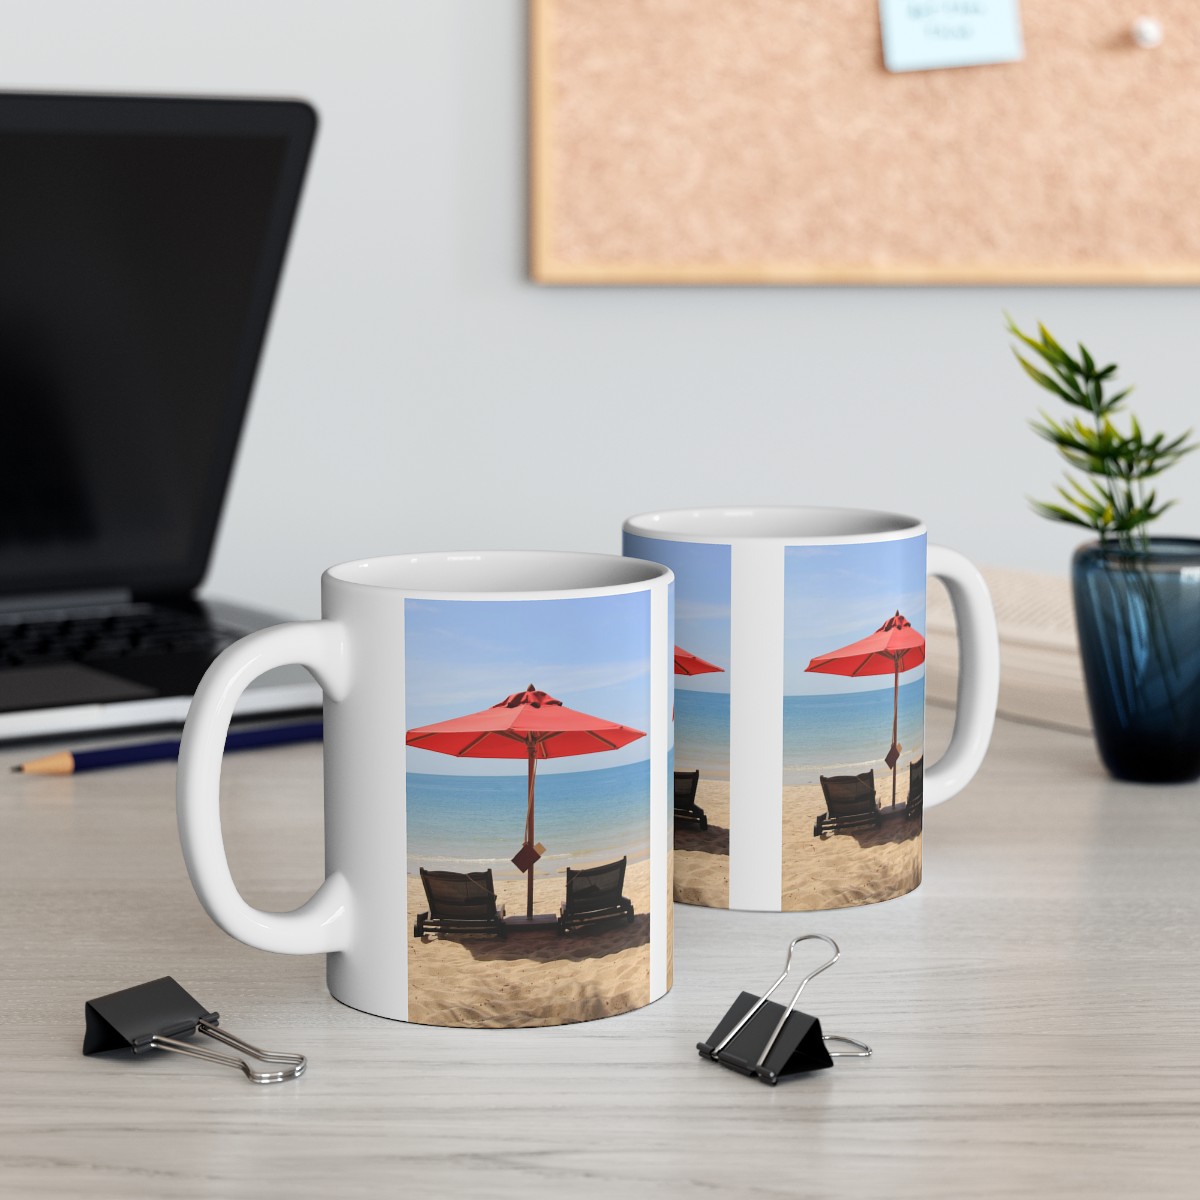 Ceramic Mug Sand Beach product thumbnail image